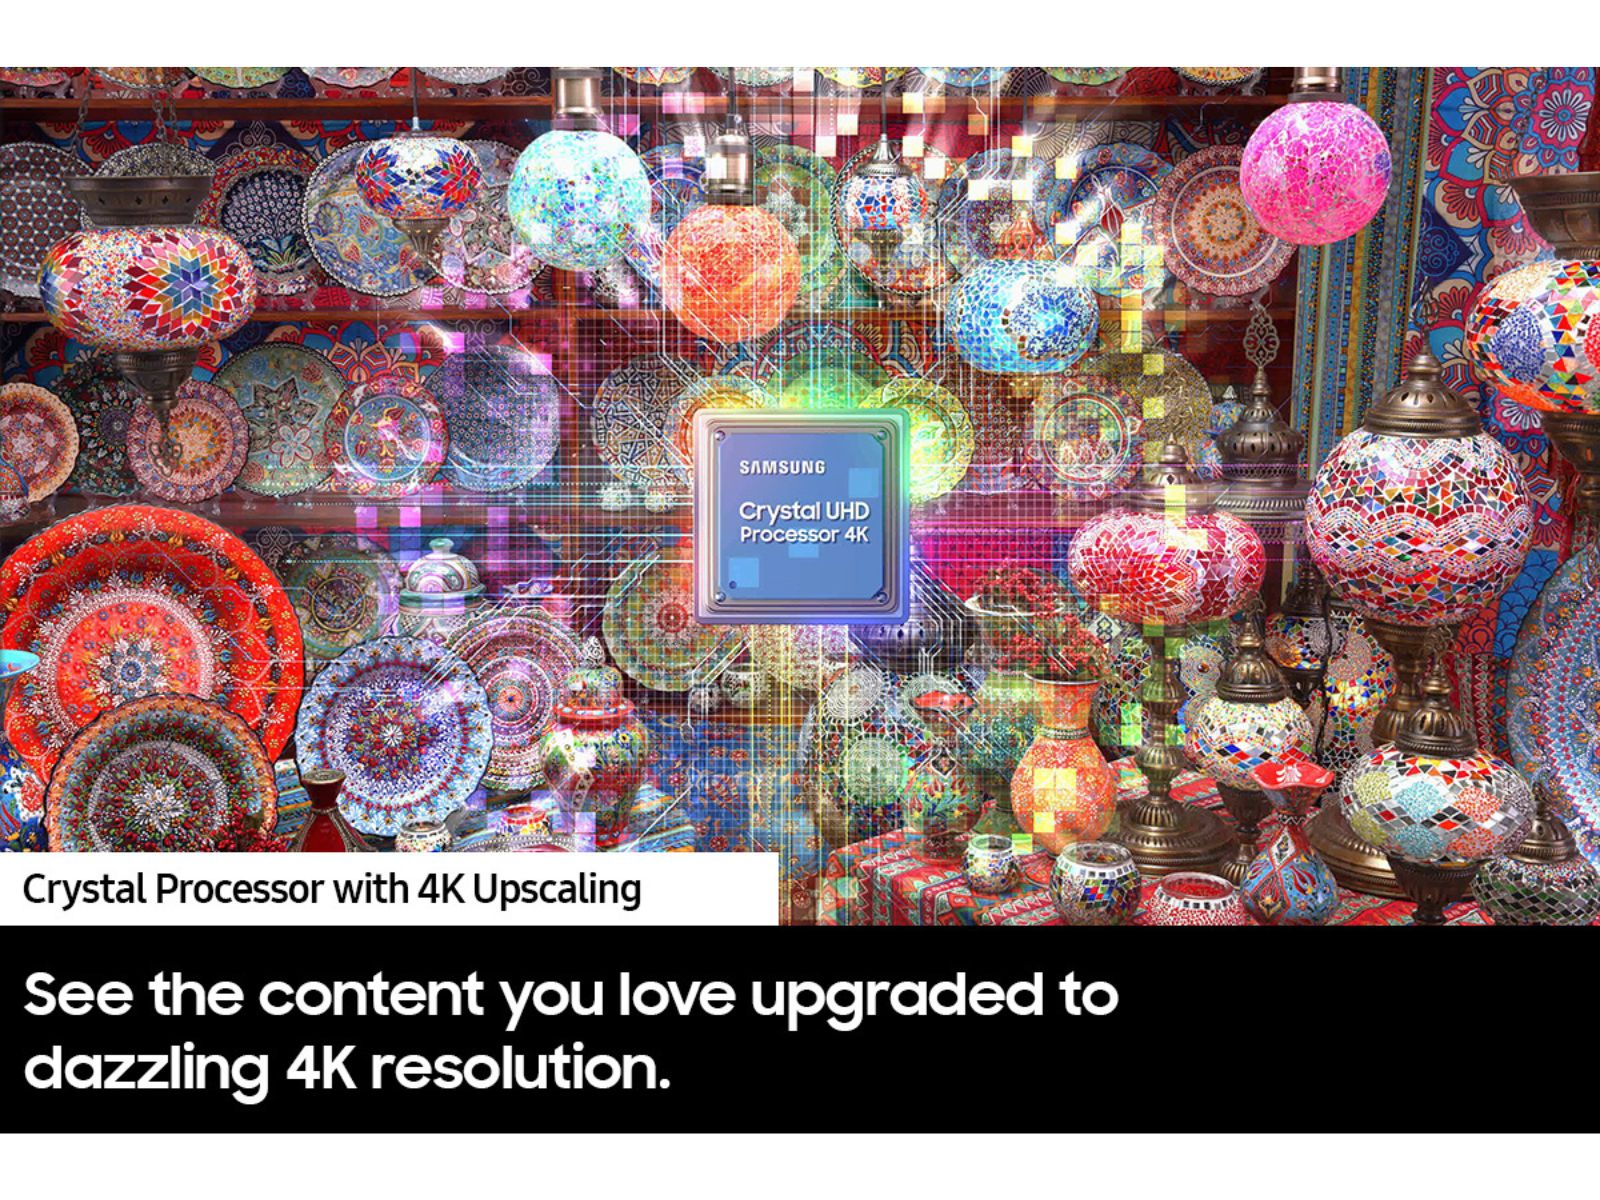 Samsung televisor un75au8000 smart led tv 4k crystal uhd de 75